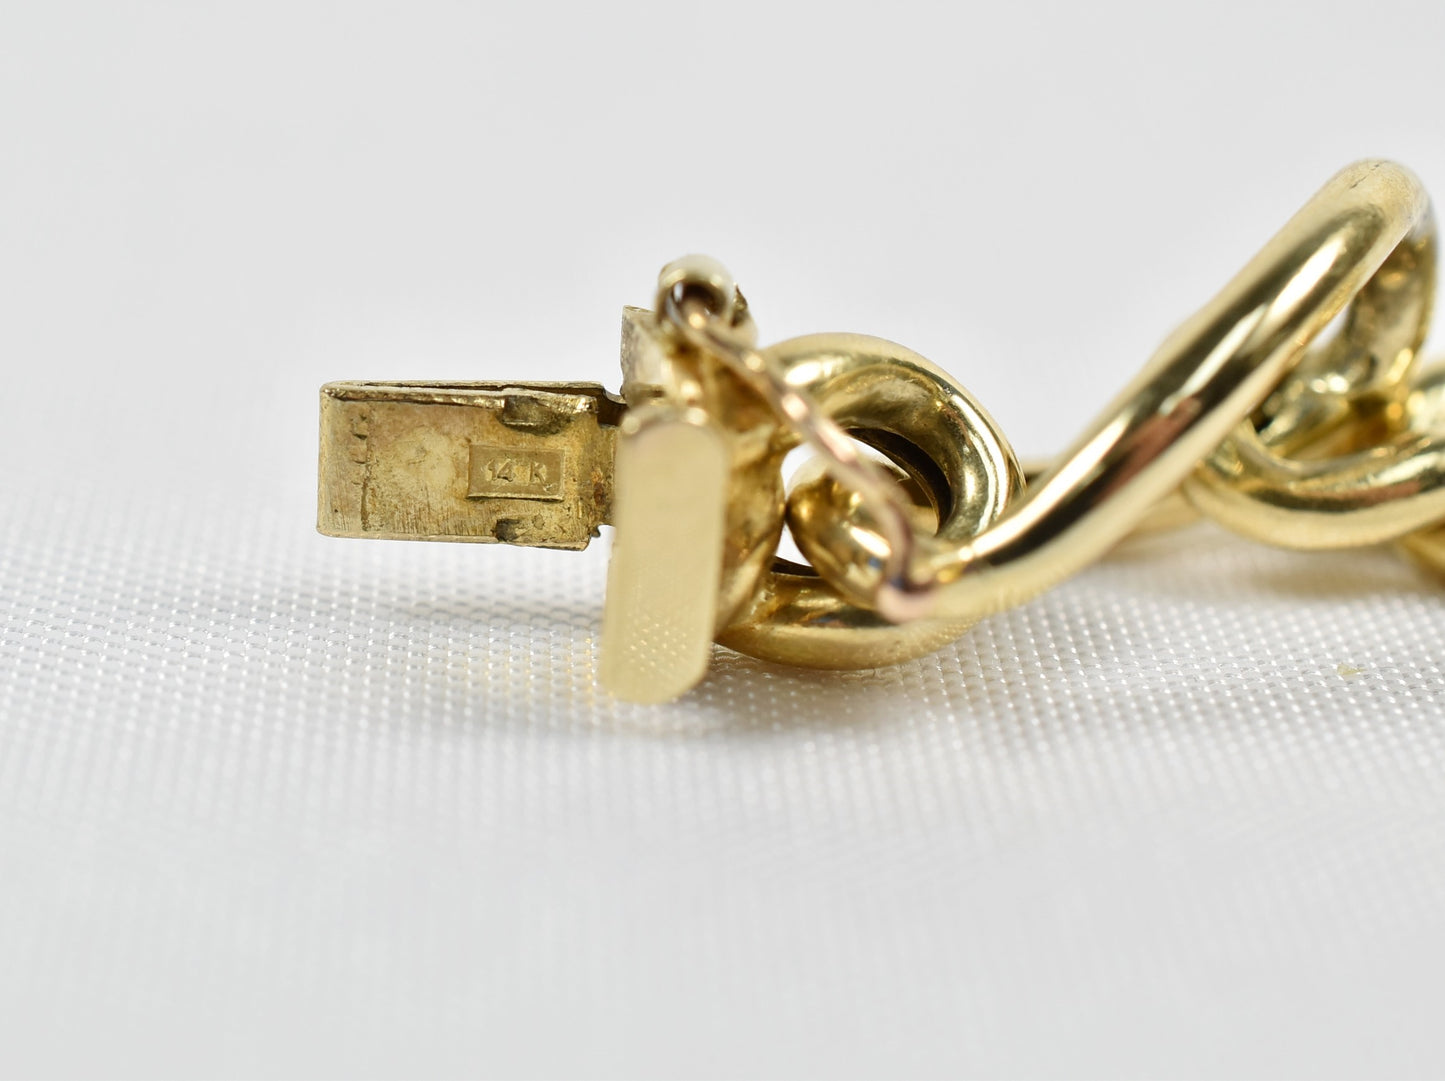 14k Yellow Gold Figaro Link Bracelet, 7 inch - 11.1g